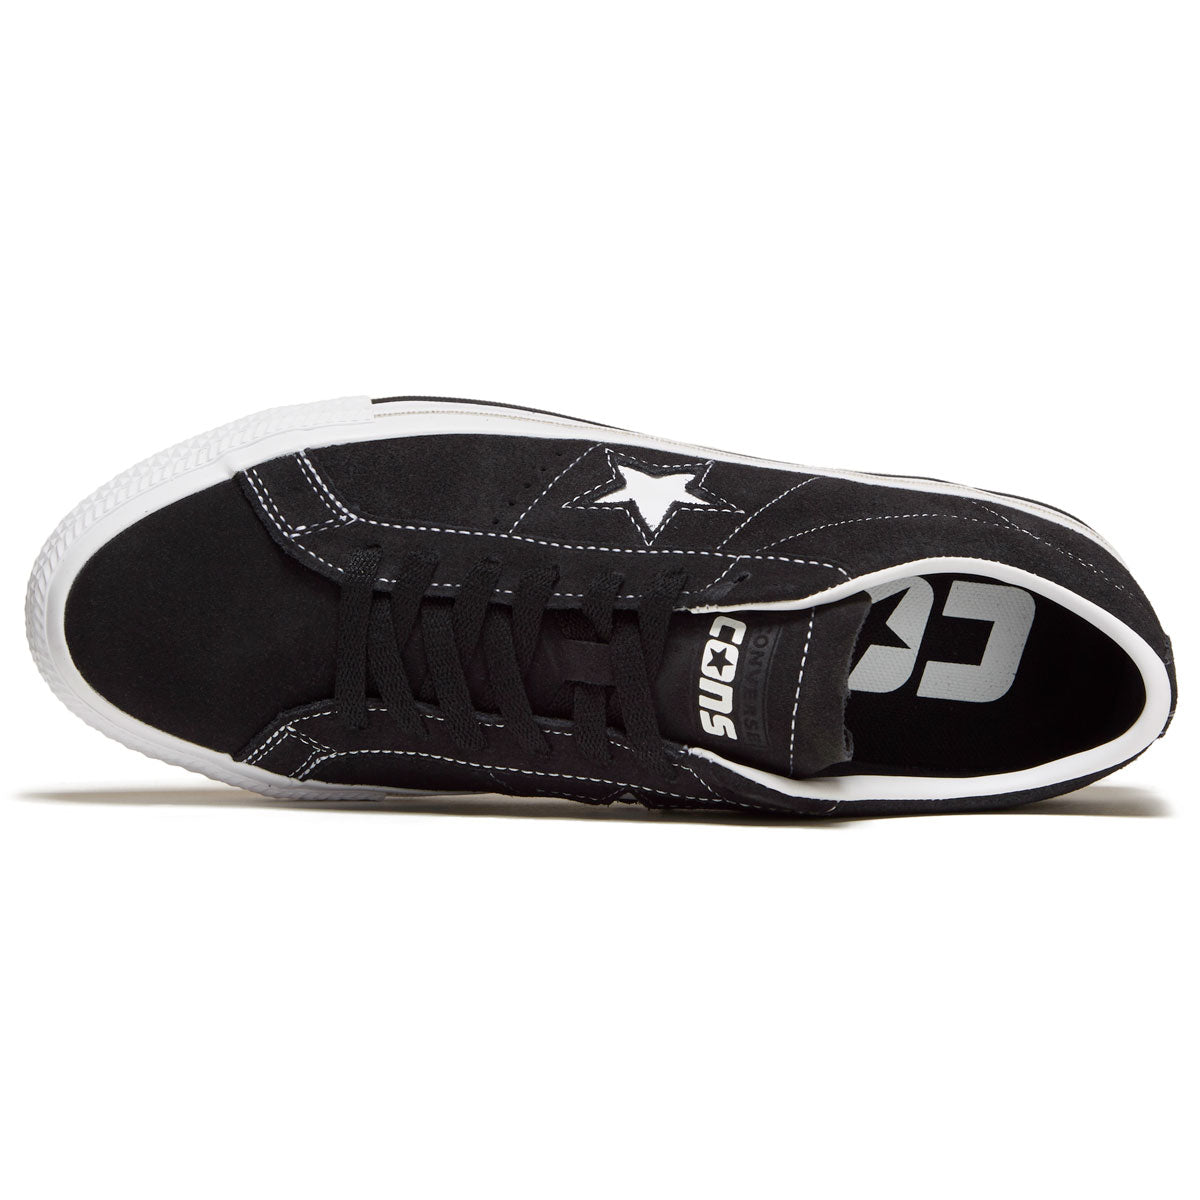 Converse One Star Pro Ox Shoes - Black/Black/White image 3